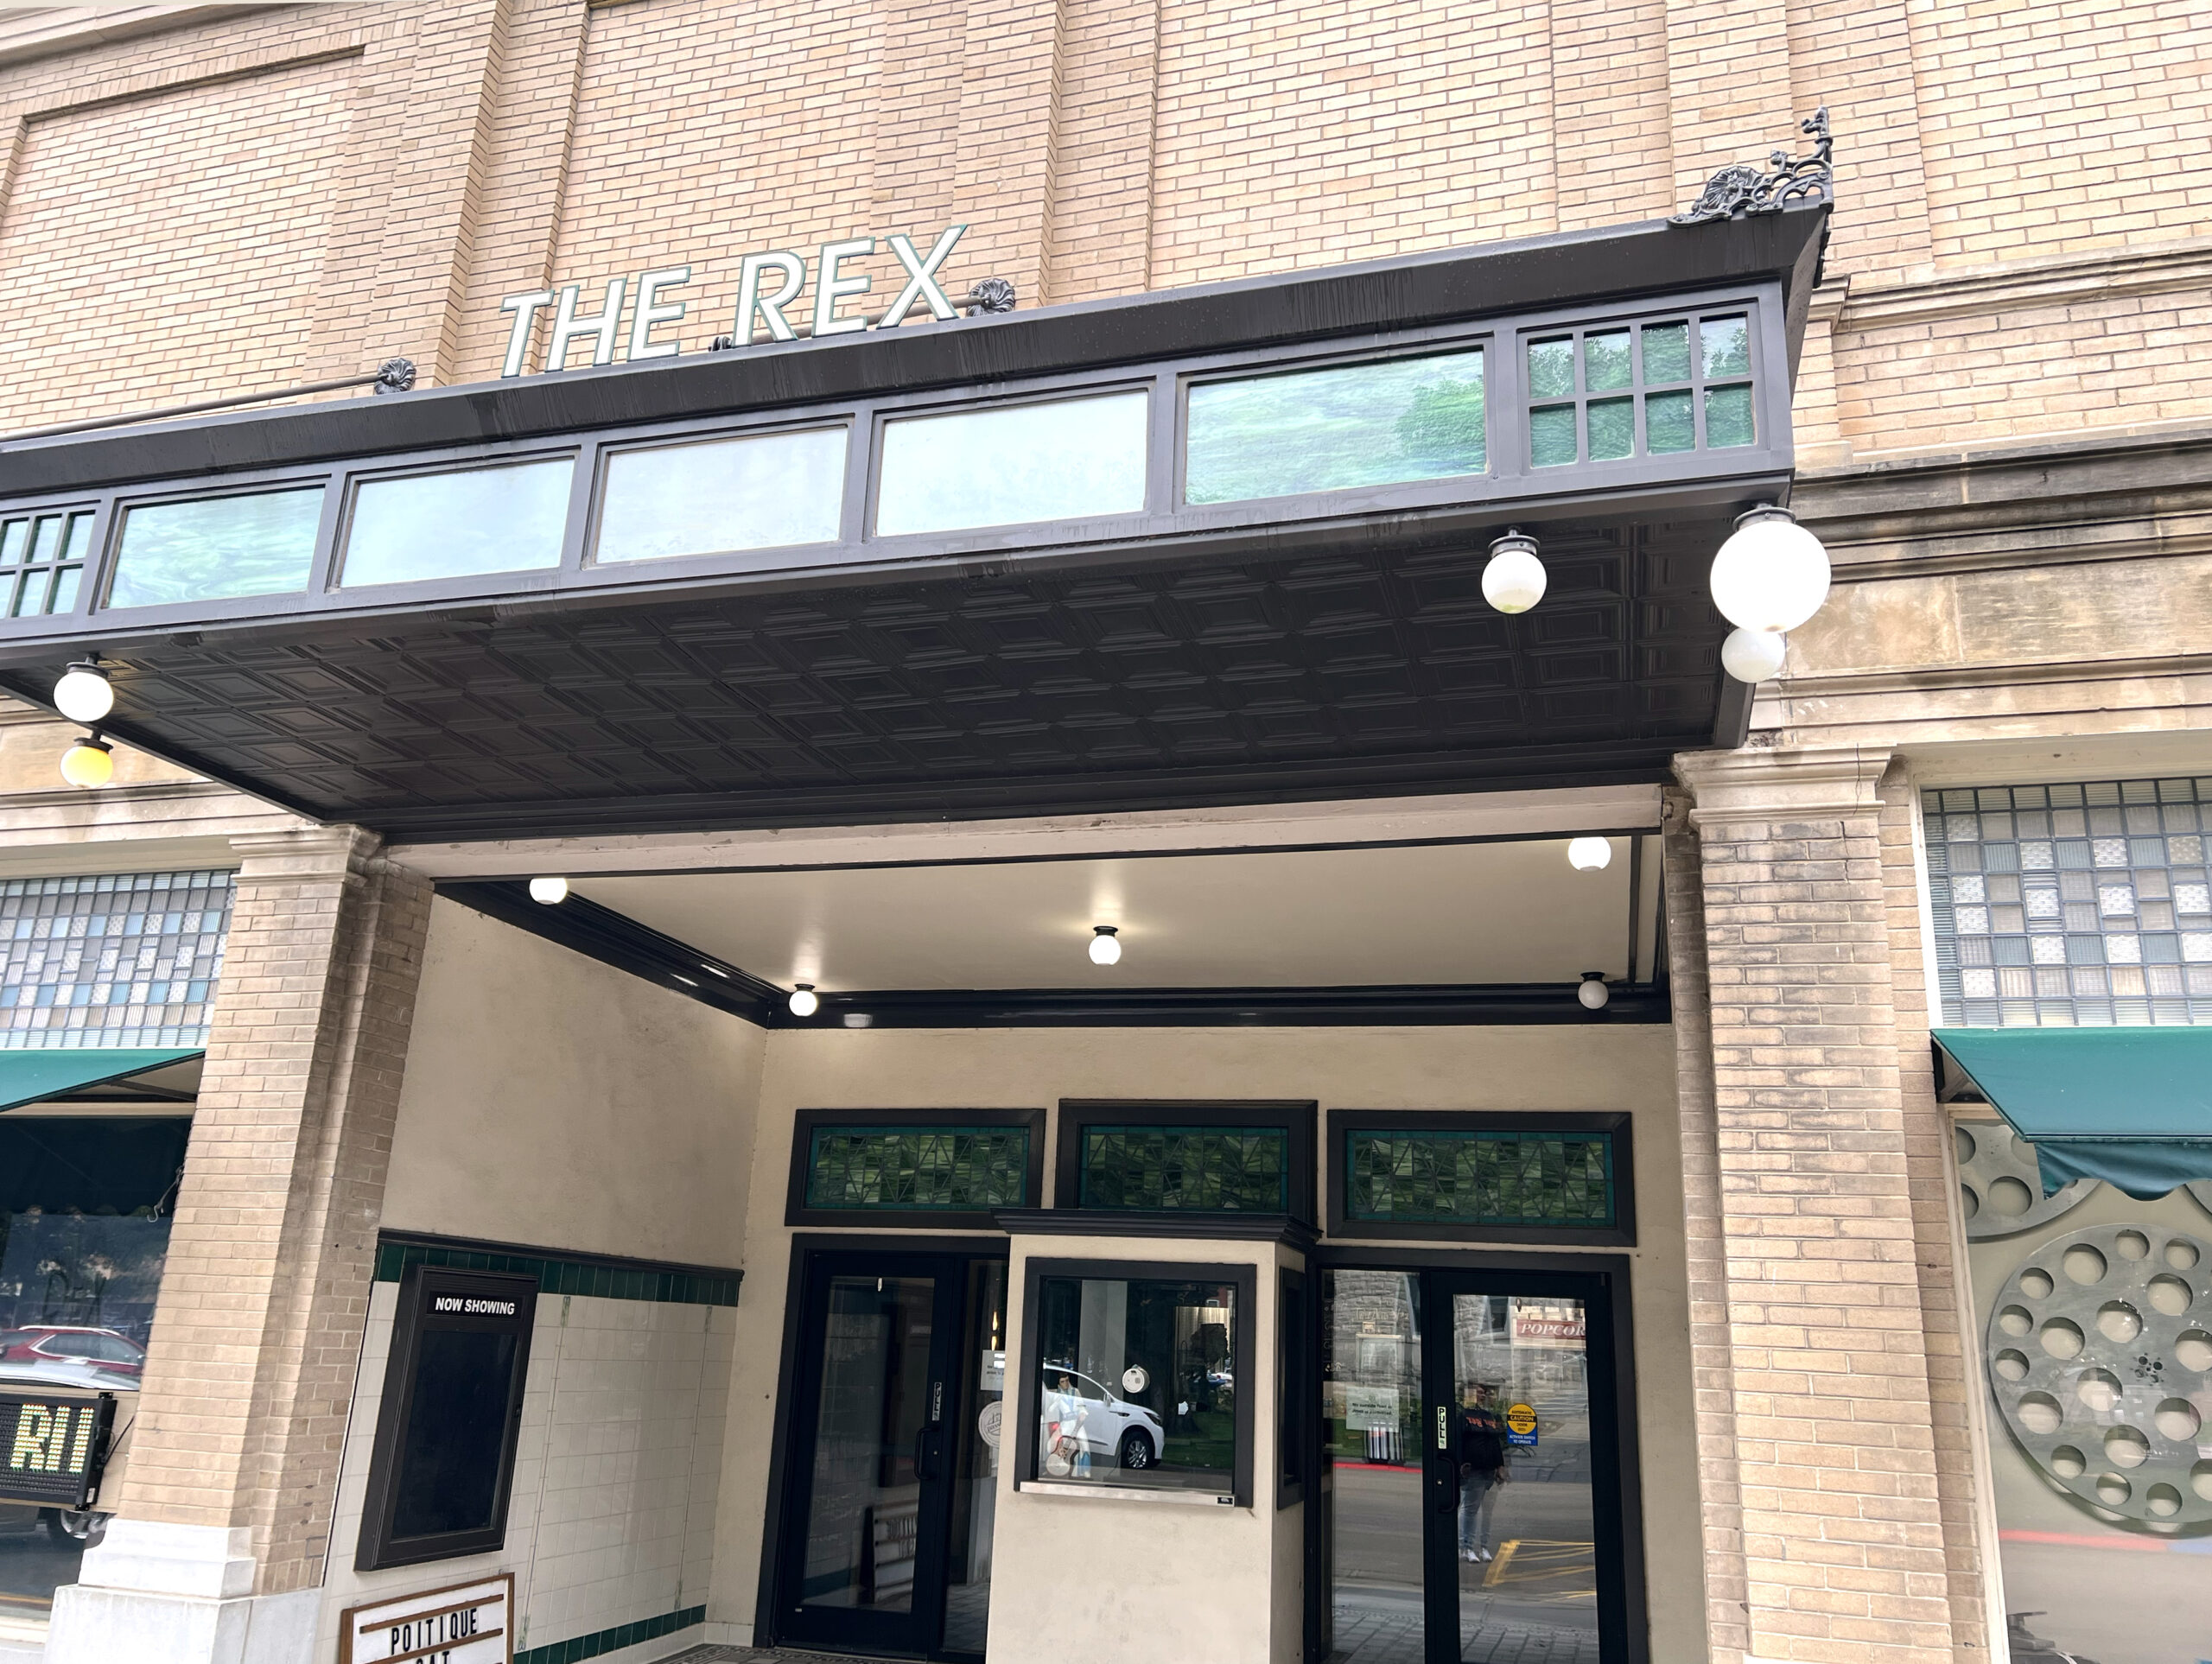 The Rex Theatre